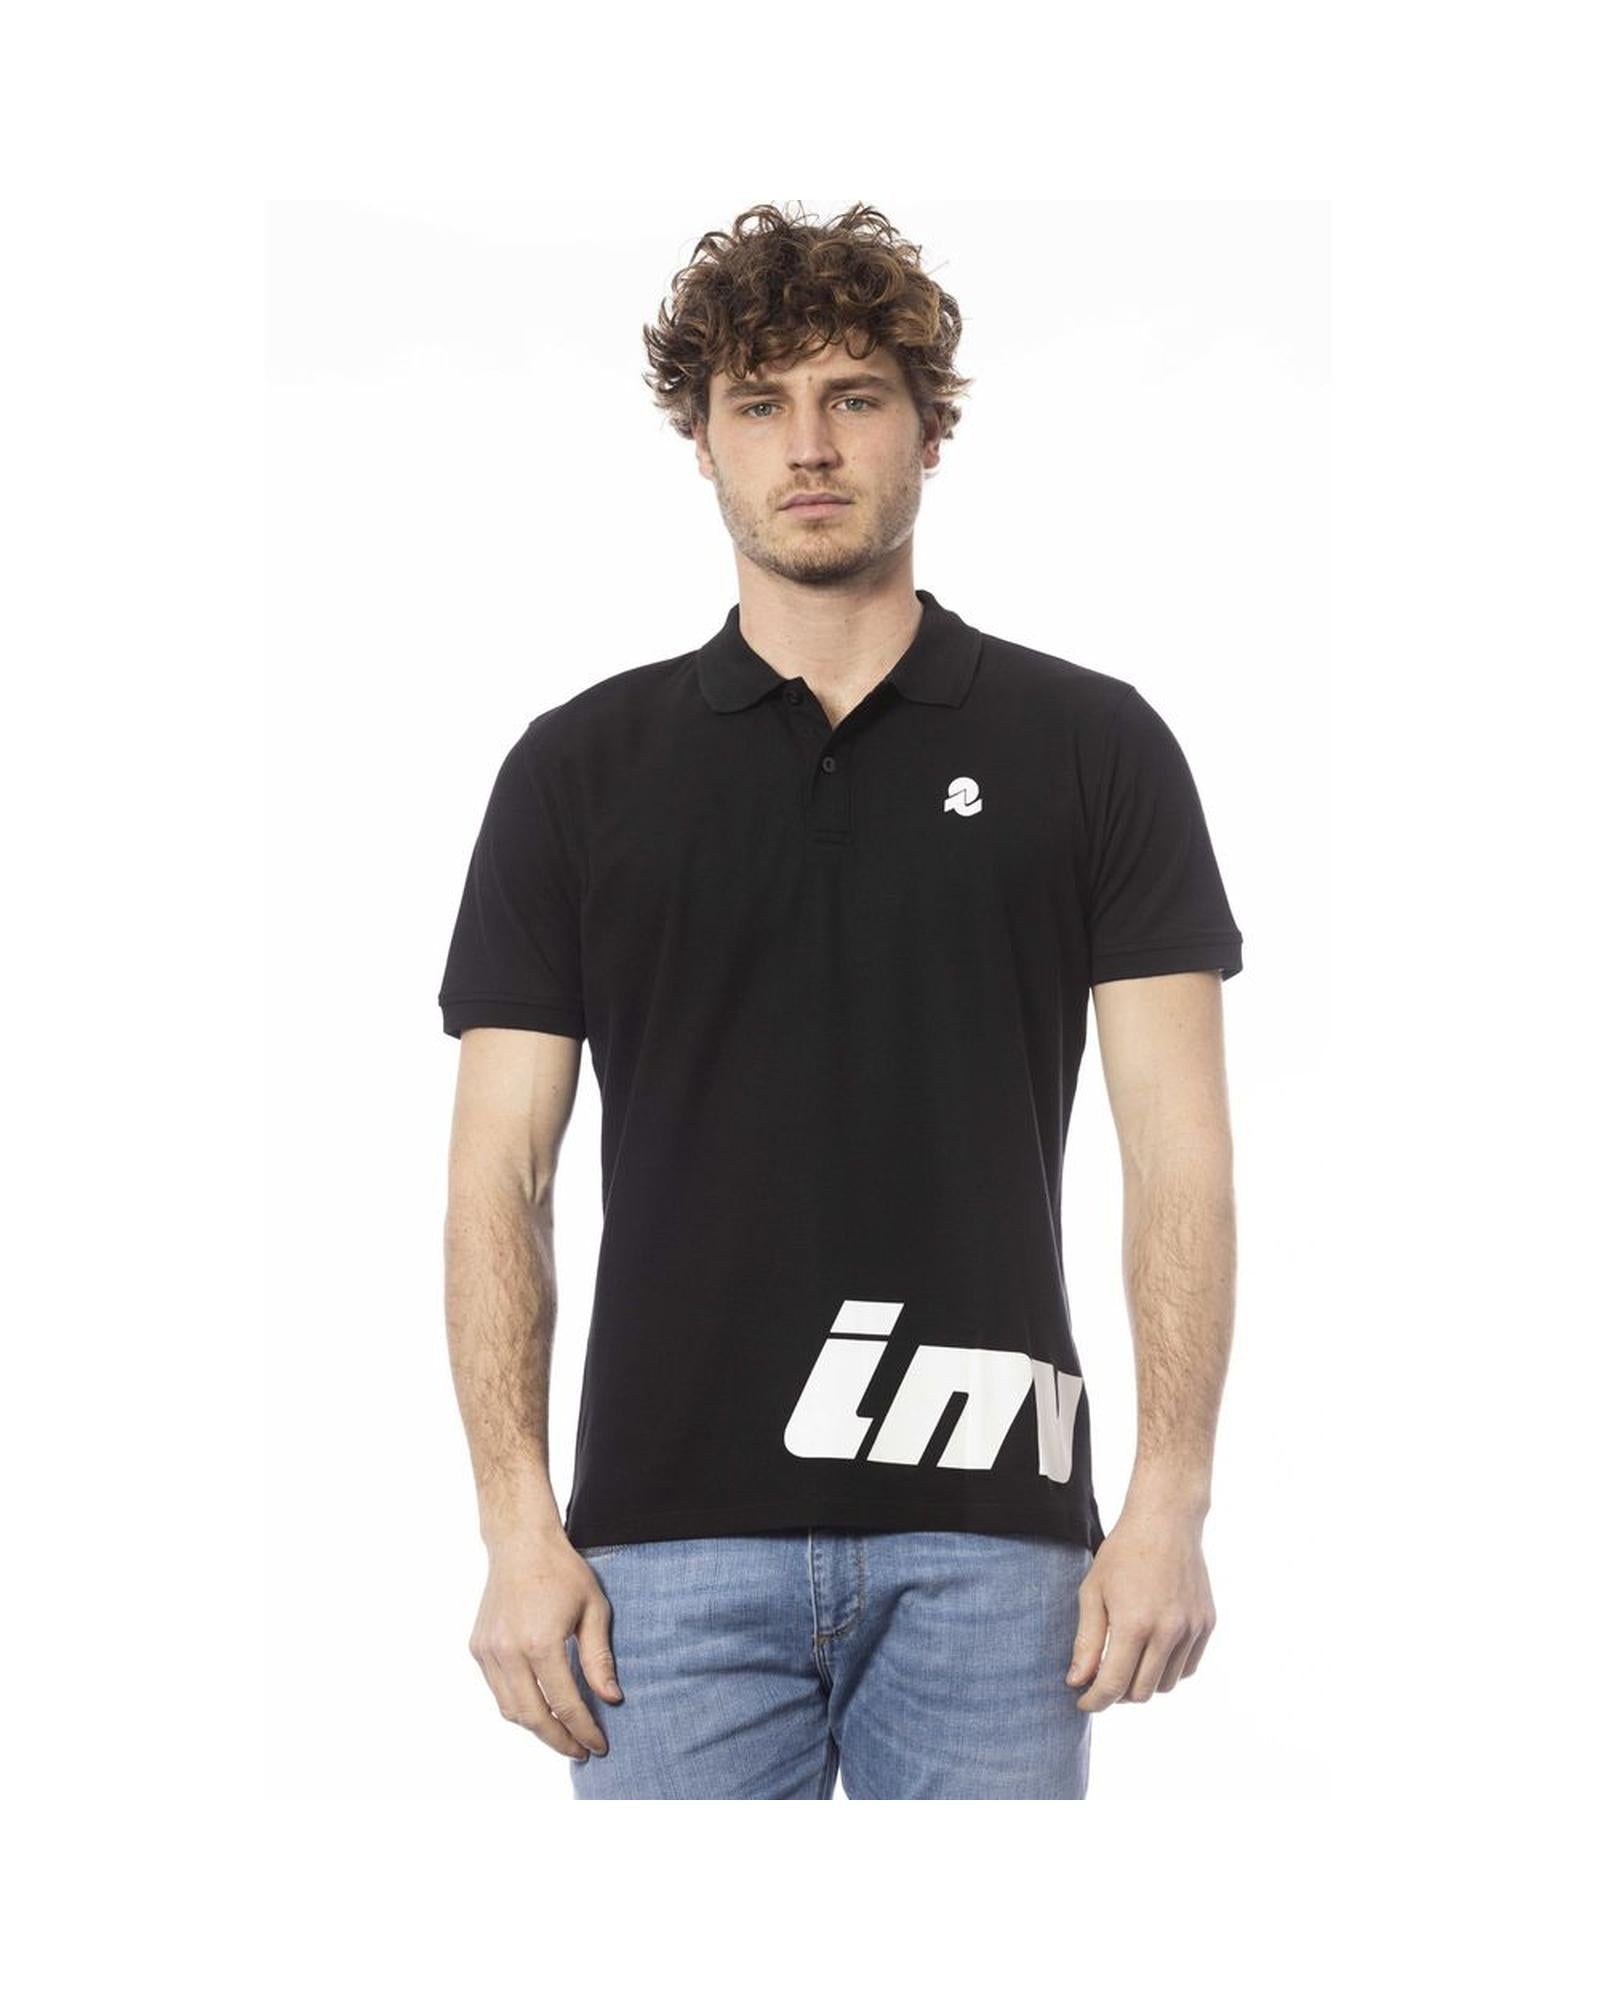 Men's Black Cotton Polo Shirt - XL